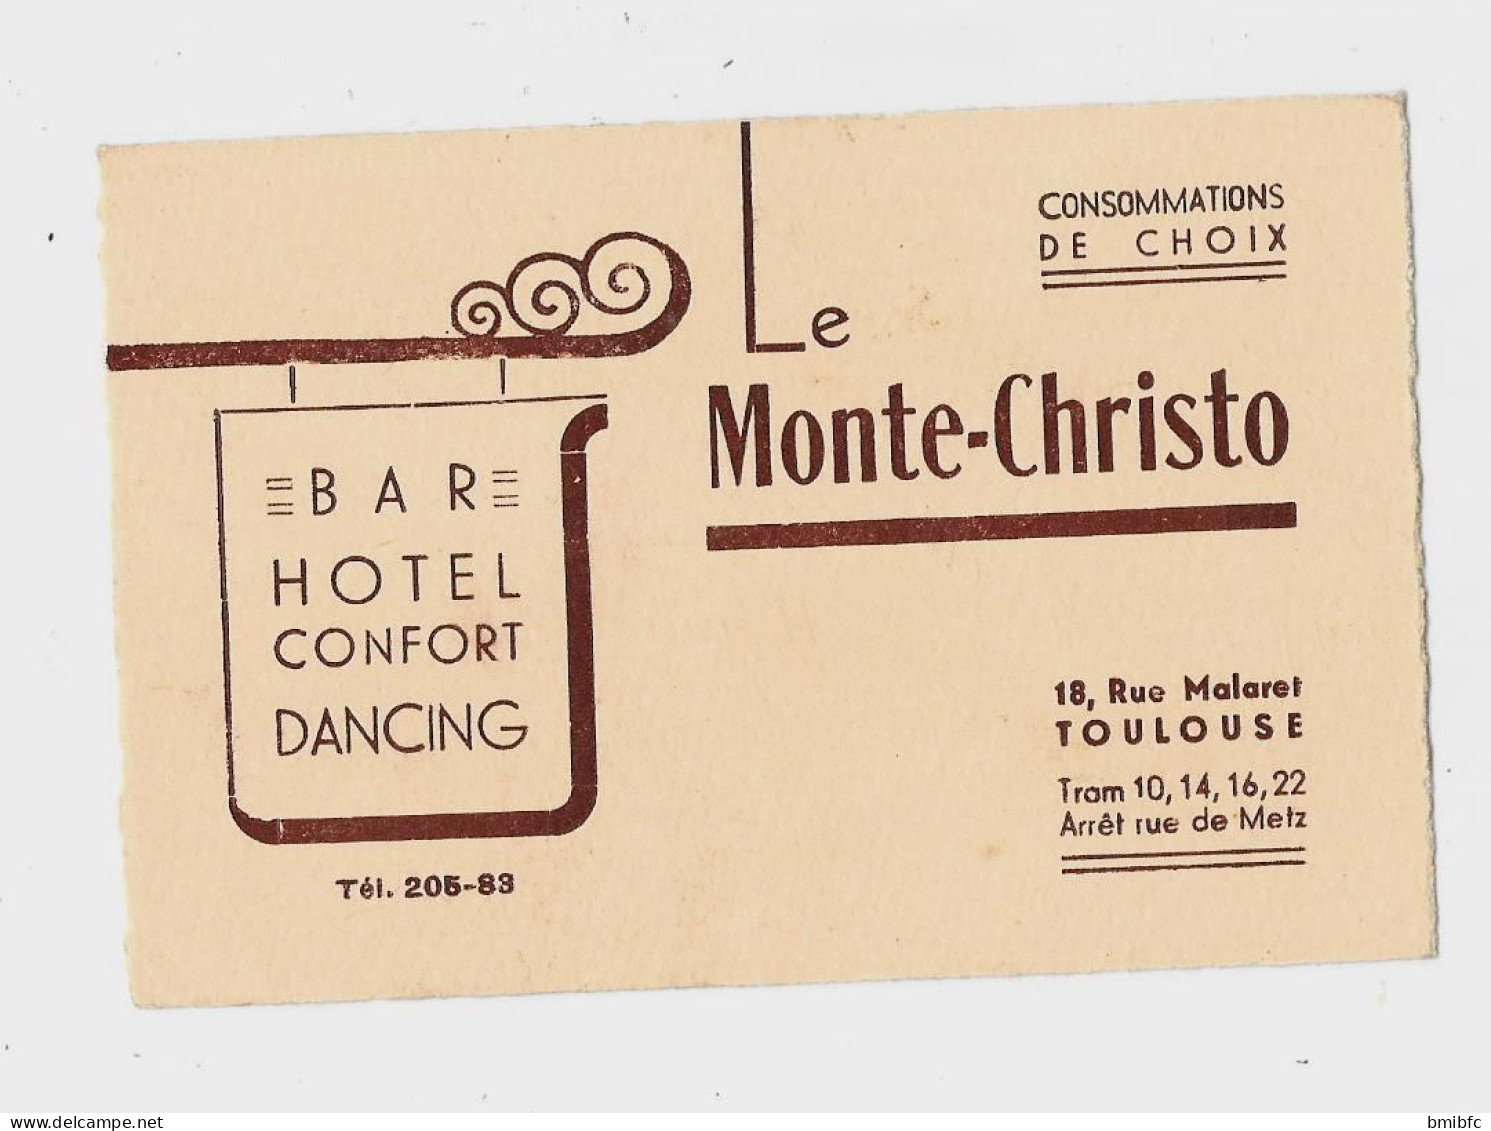 BAR HOTEL CONFORT DANCING Tél  205-83 Le Monte-Christo 18, Rue Malaret TOULOUSE Tram 10,14,16,22 - Visitenkarten